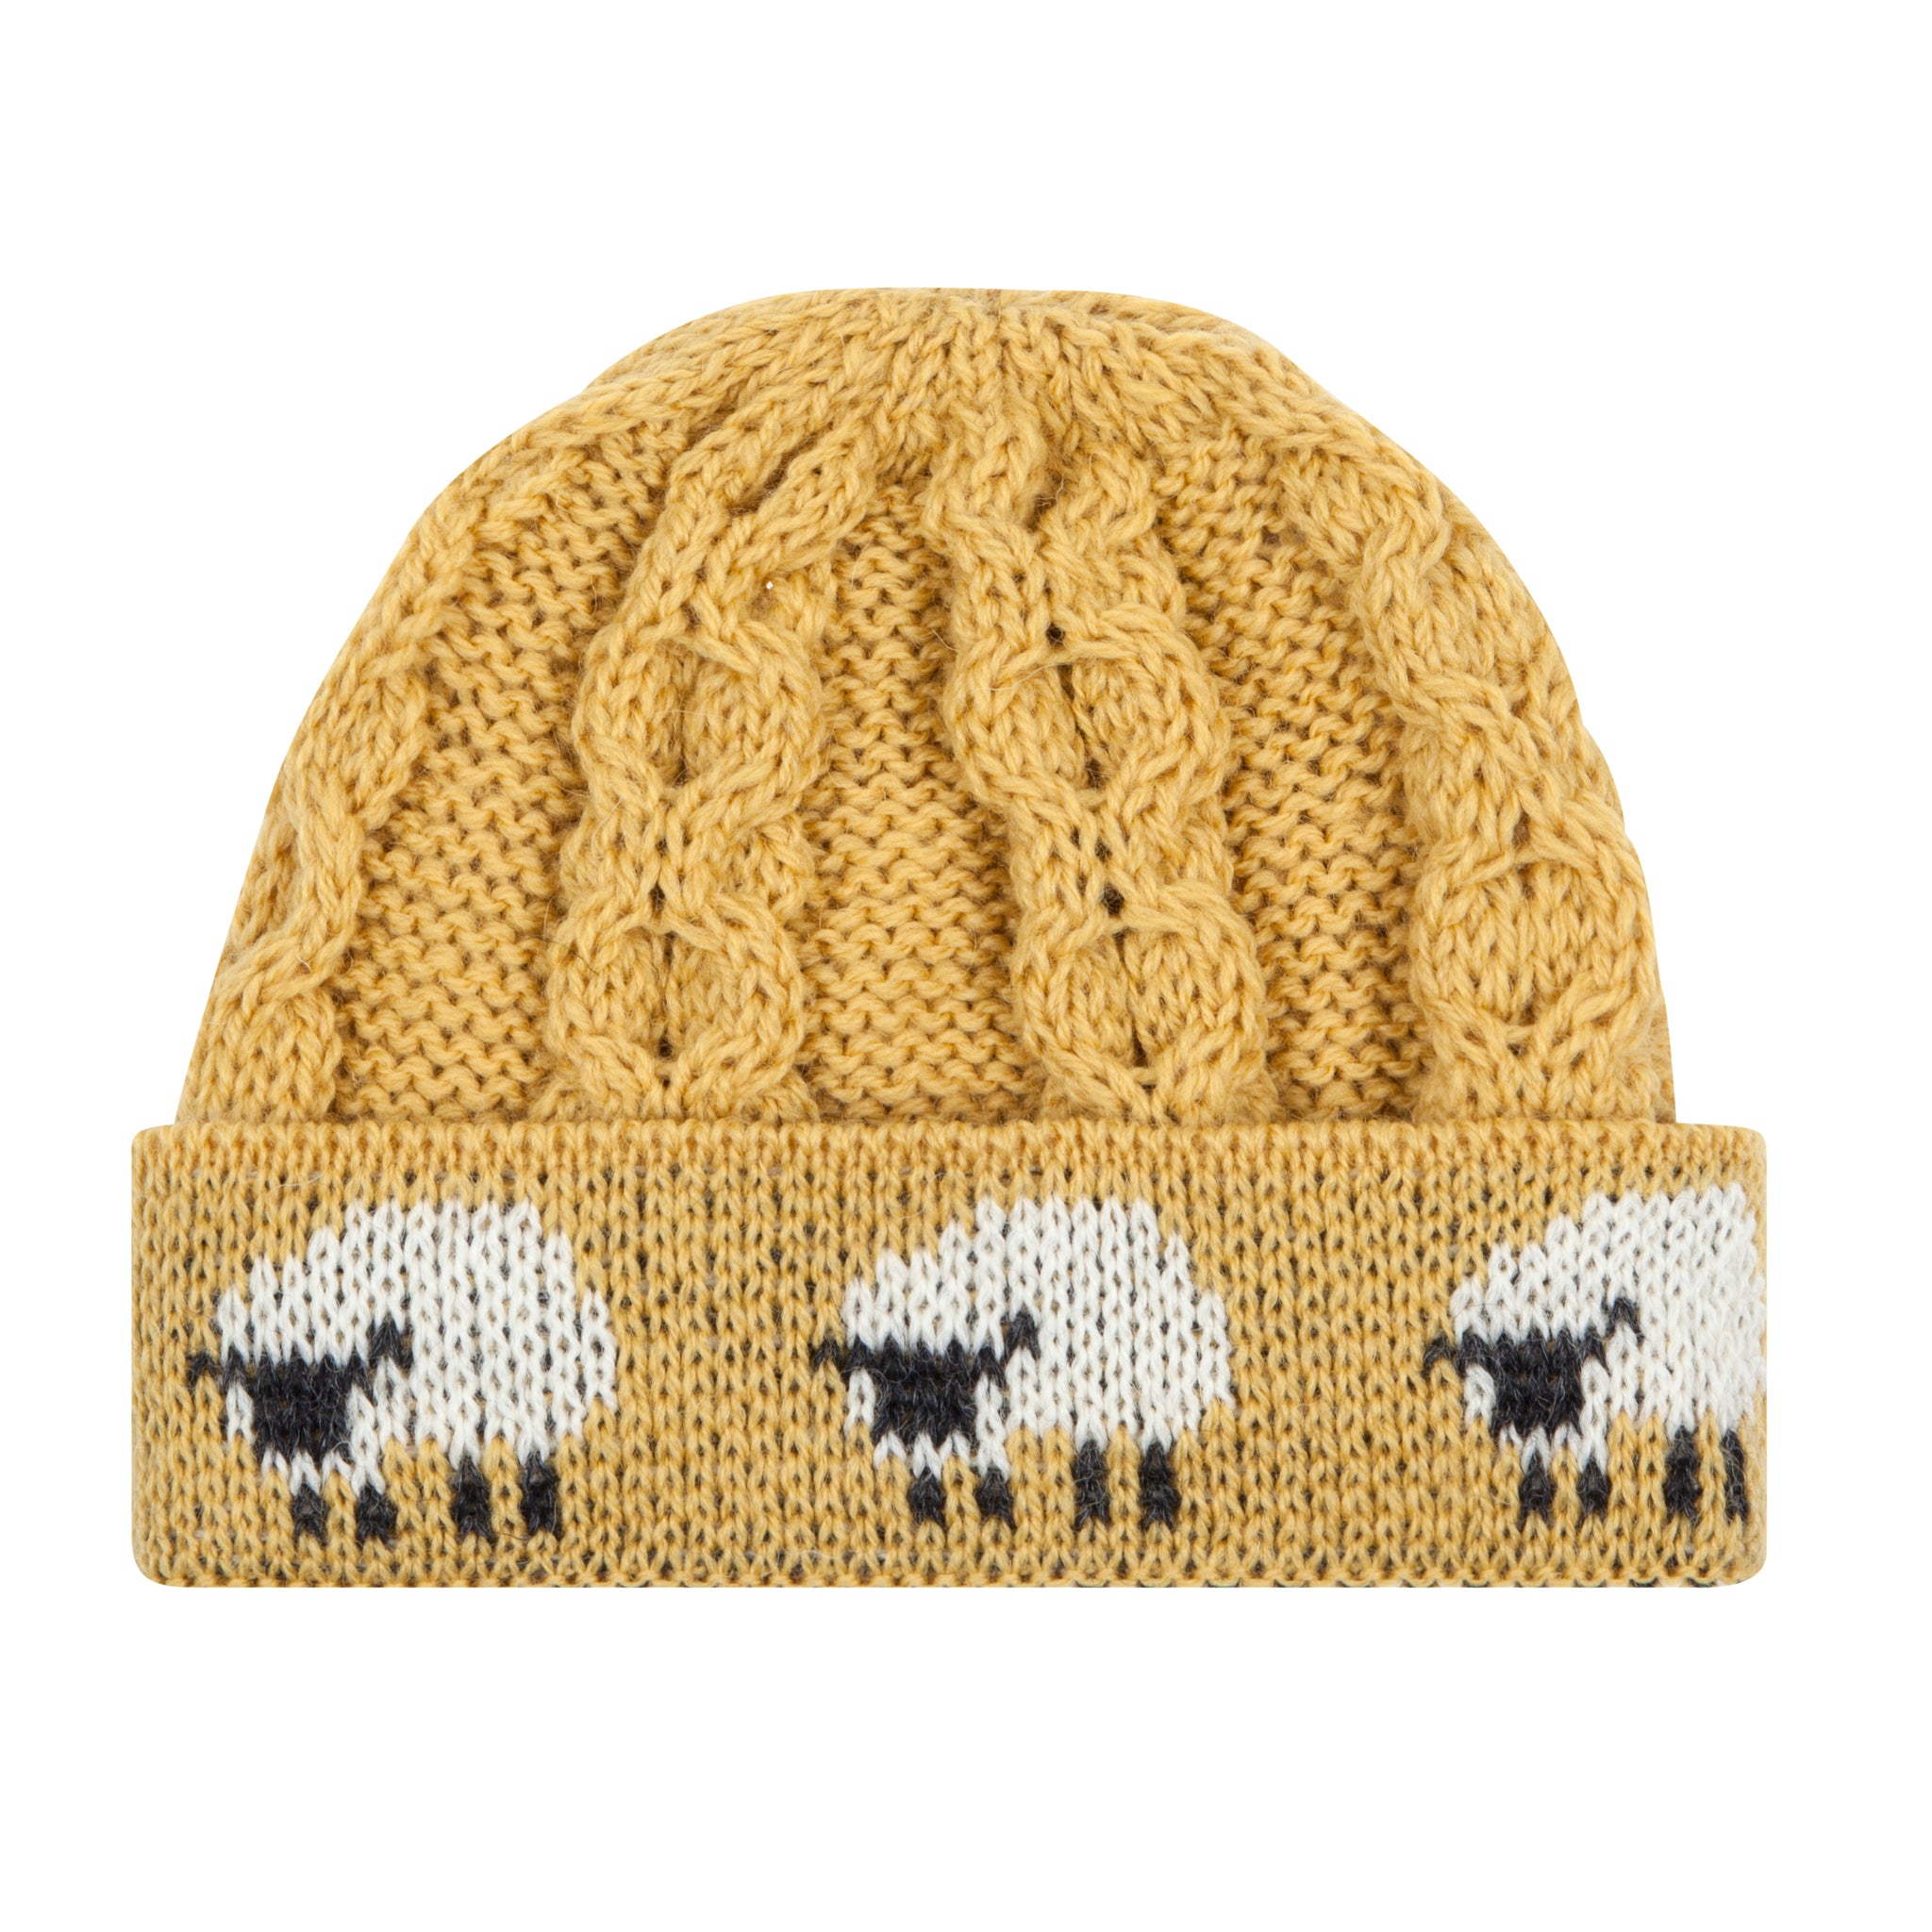 Sheep Hat, 100% British Wool